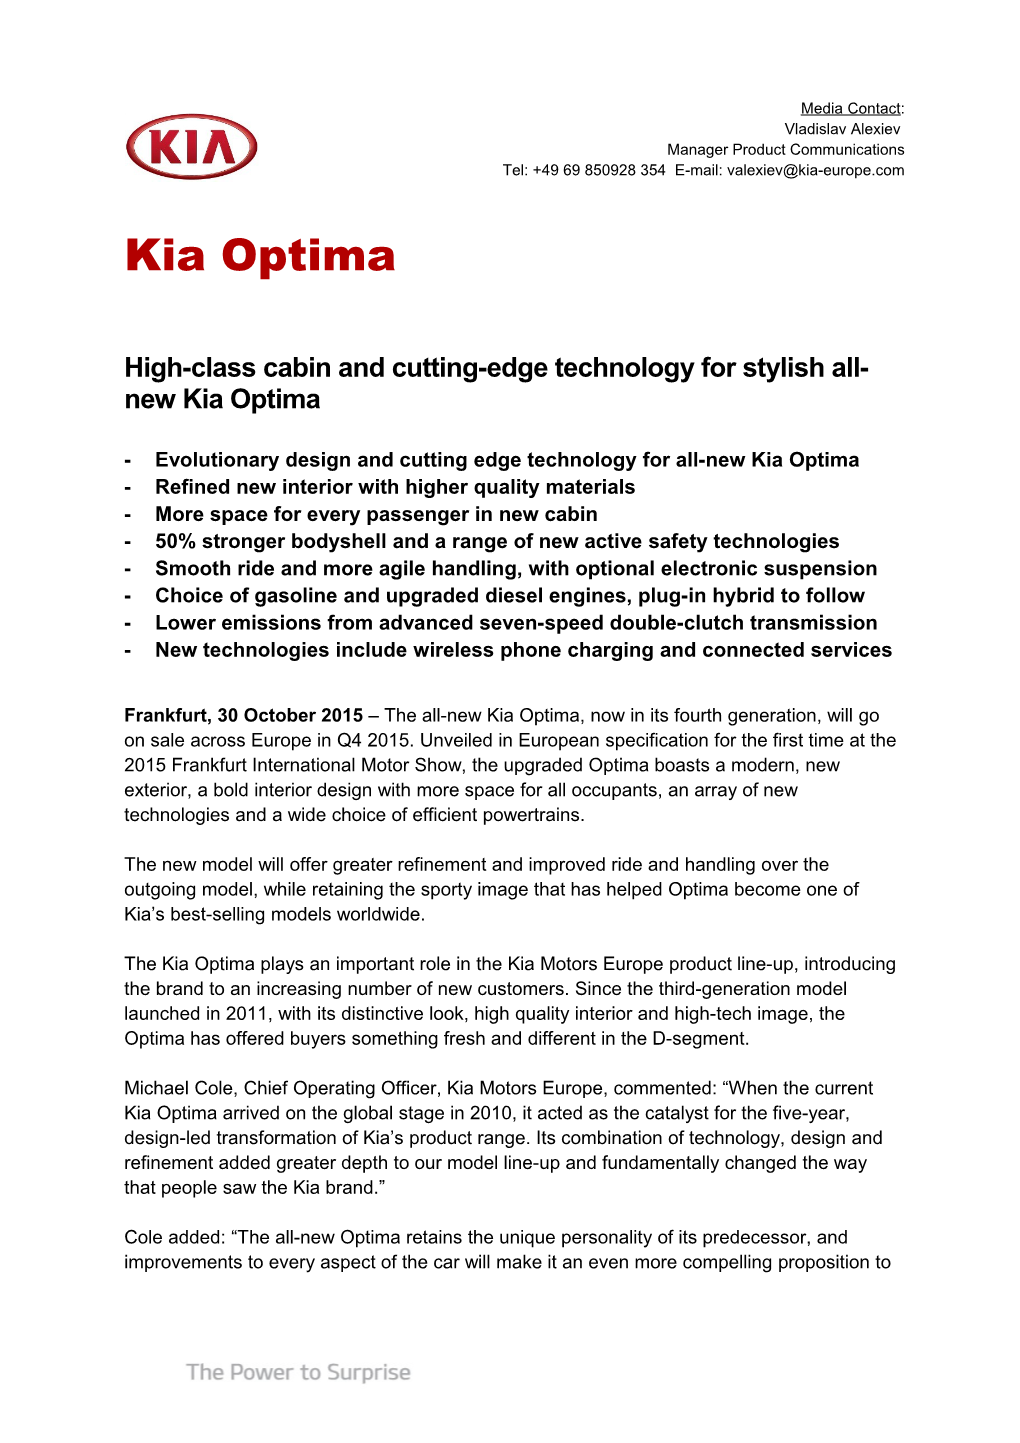 Evolutionary Design and Cutting Edge Technology for All-New Kia Optima